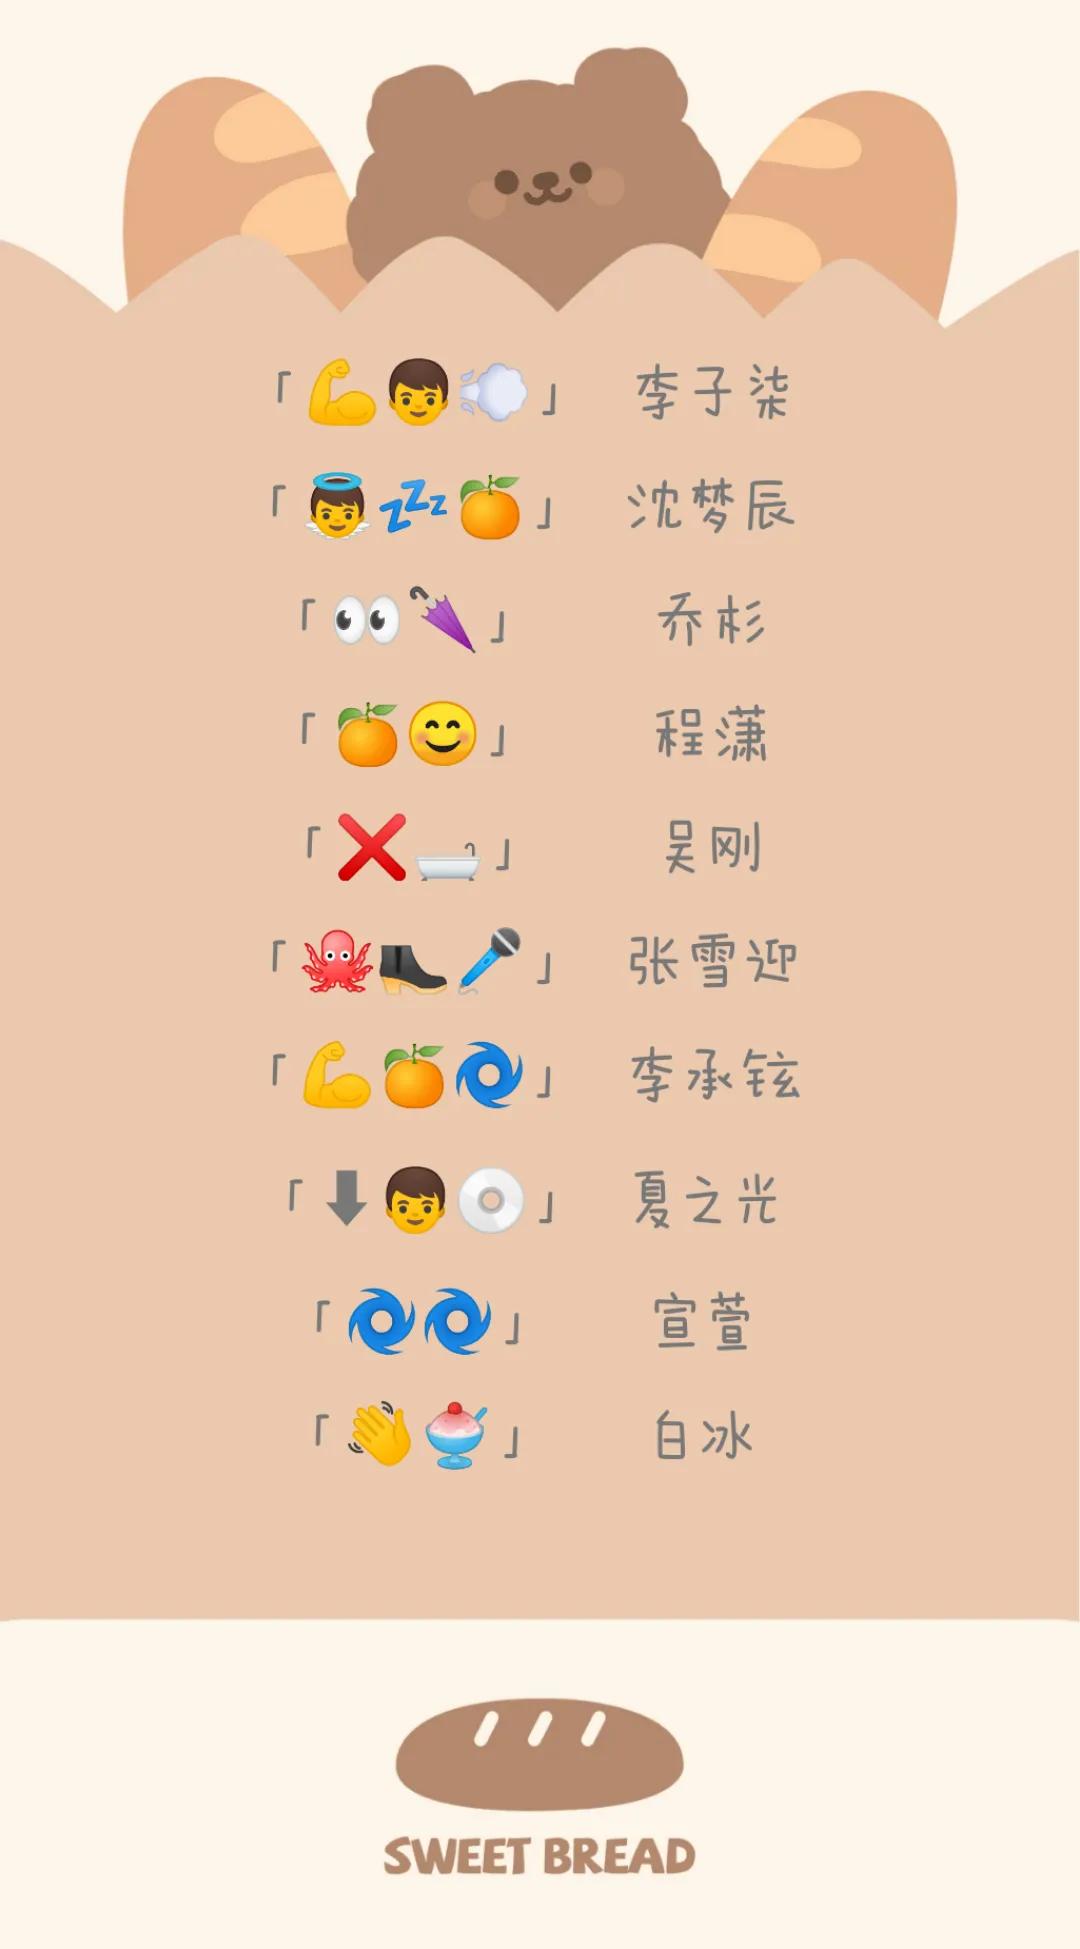 emoji表情猜明星名字图片